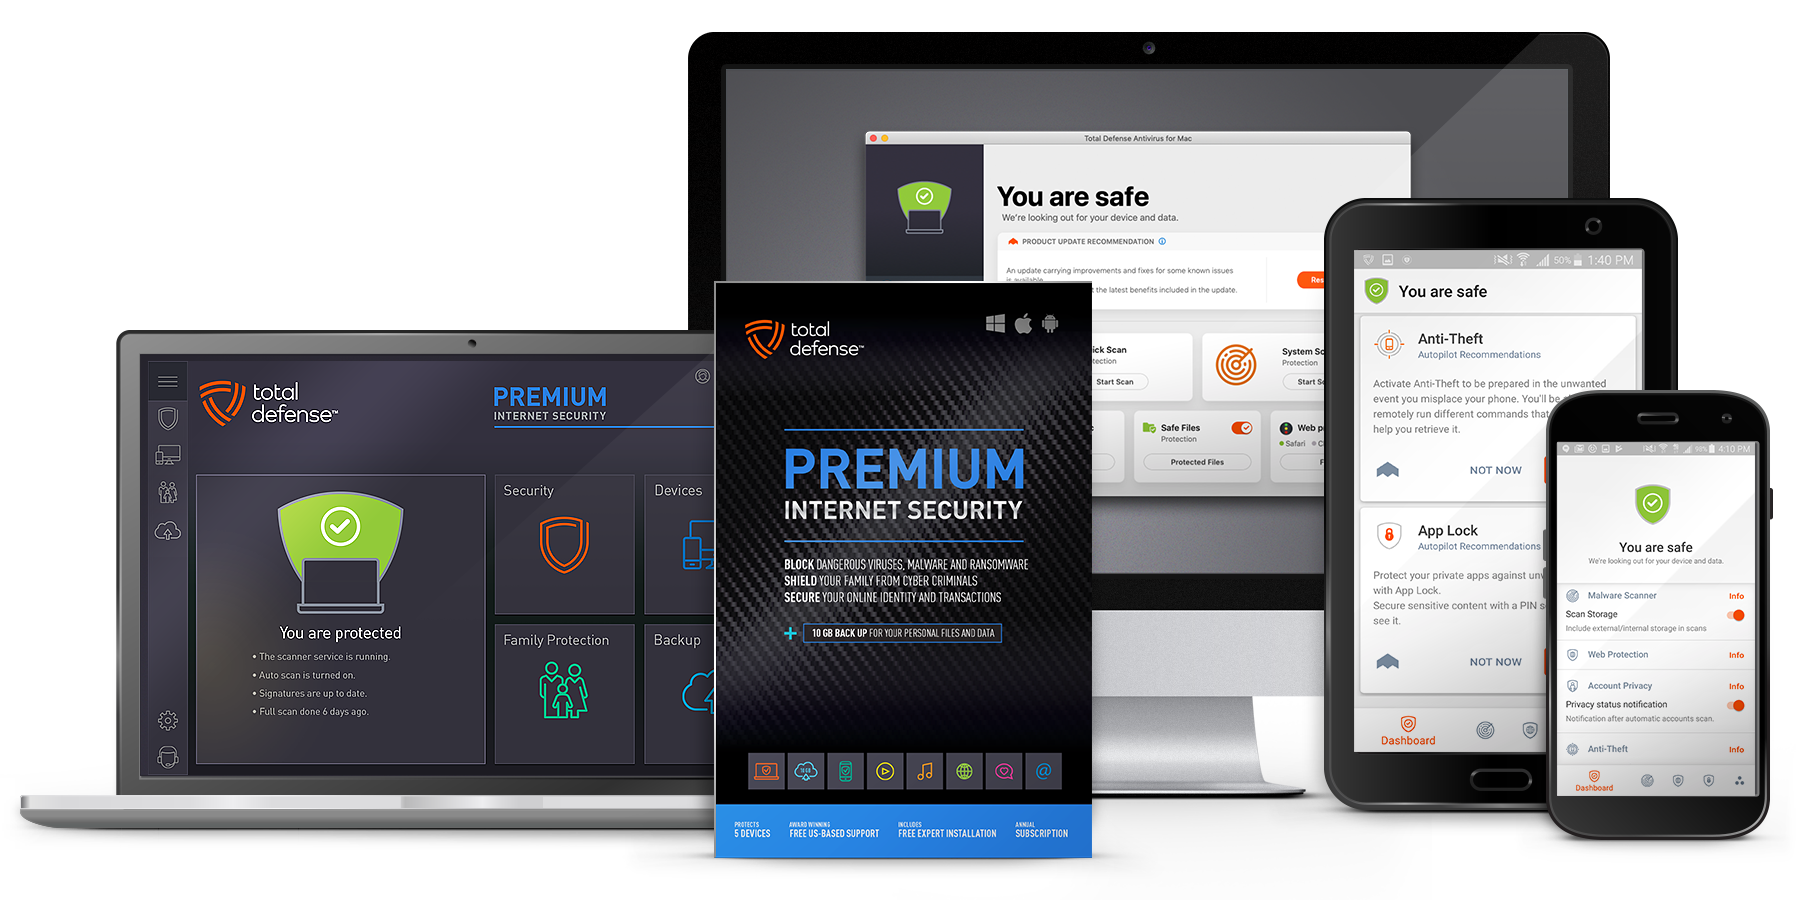 Premium Internet Security - Bestselling Anti-virus Security